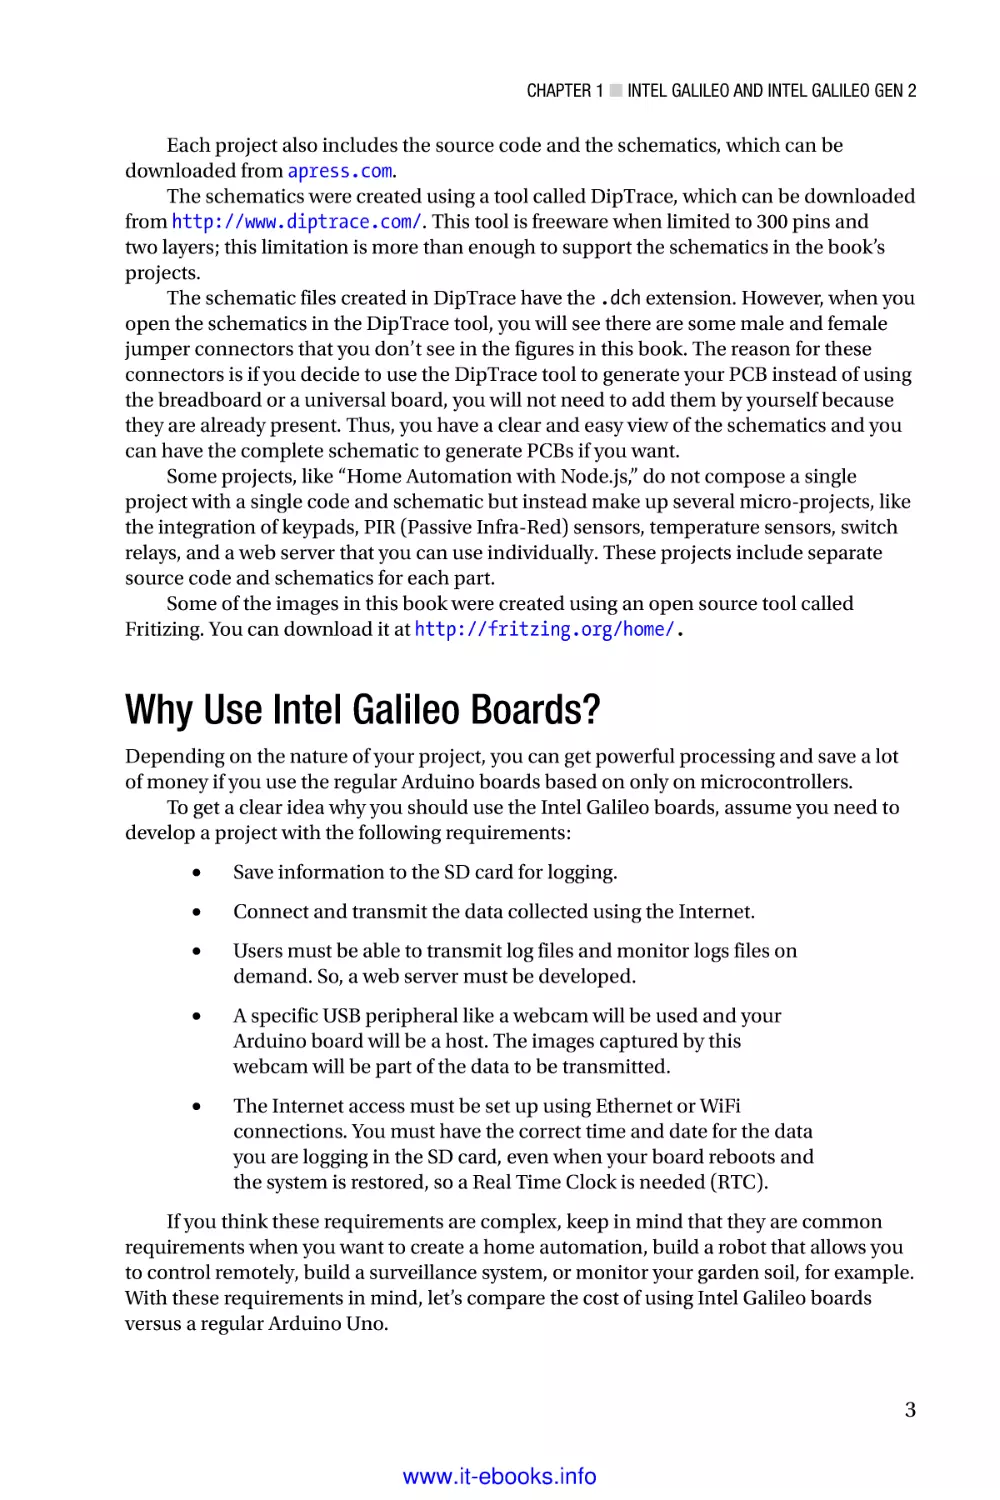 Why Use Intel Galileo Boards?